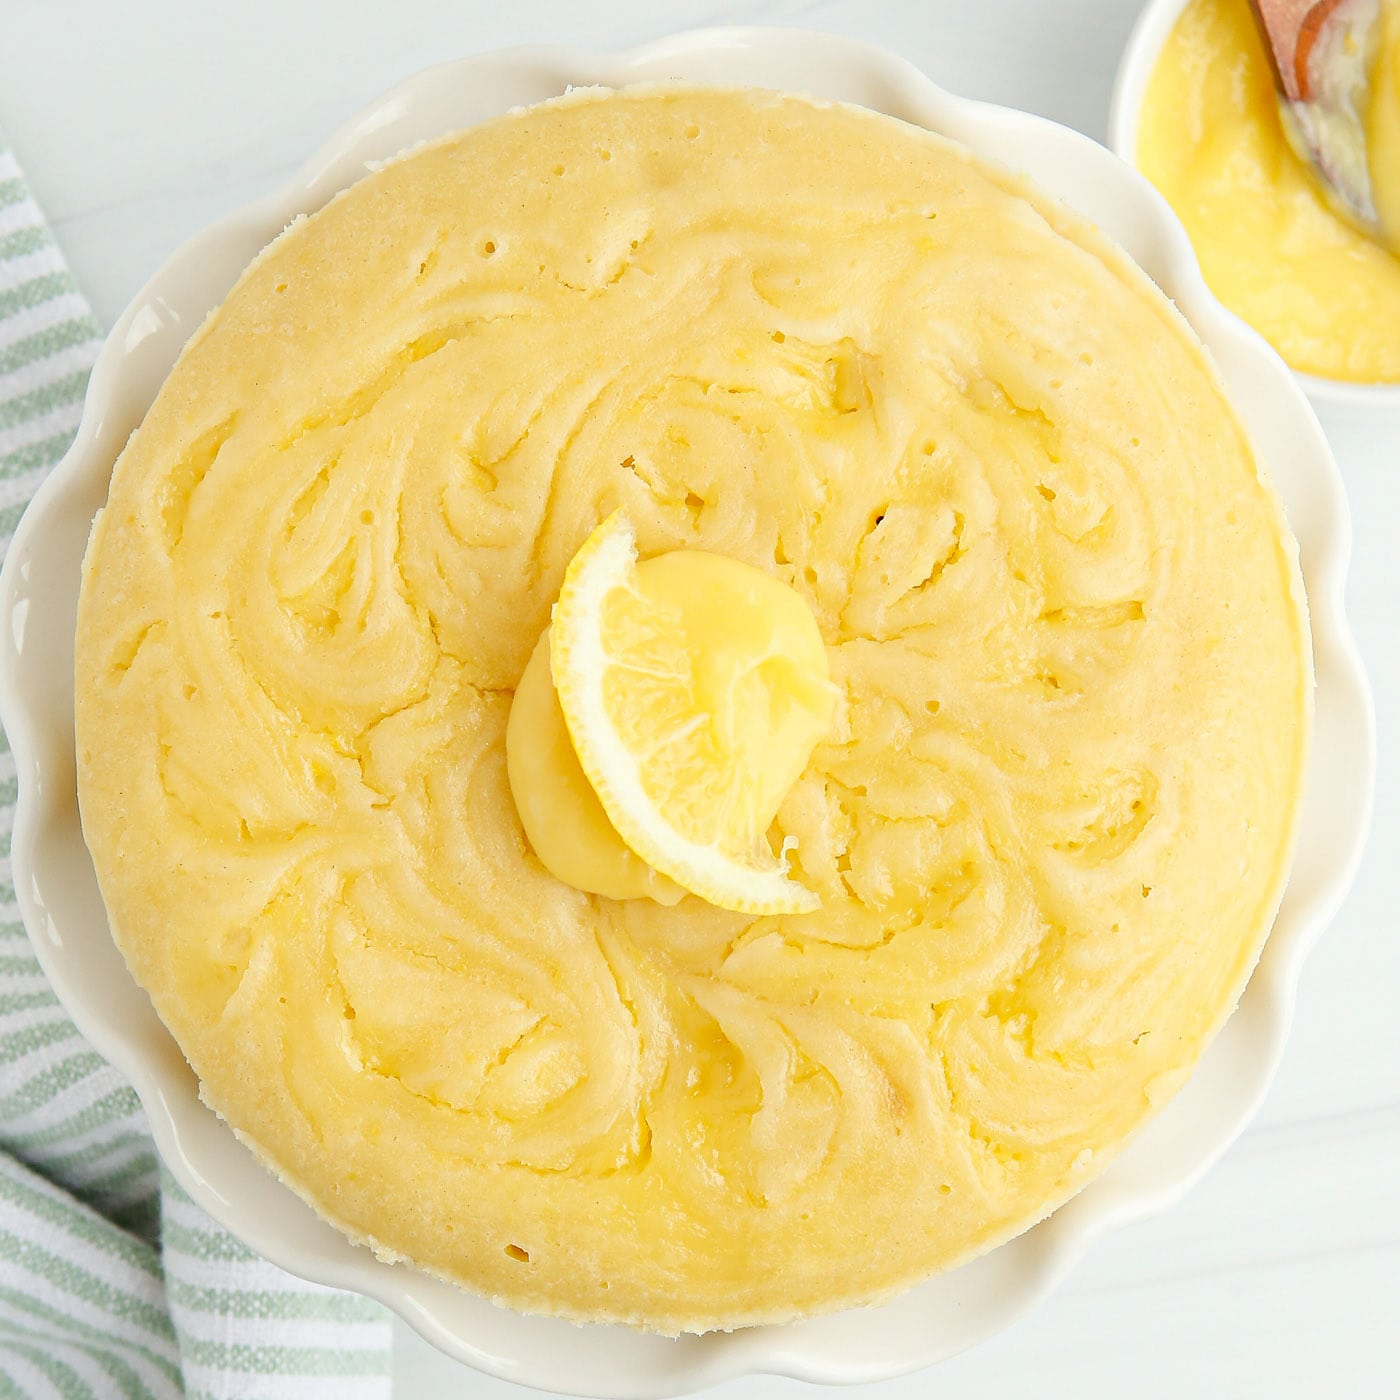 Easy Instant Pot Lemon Cake - One Happy Housewife